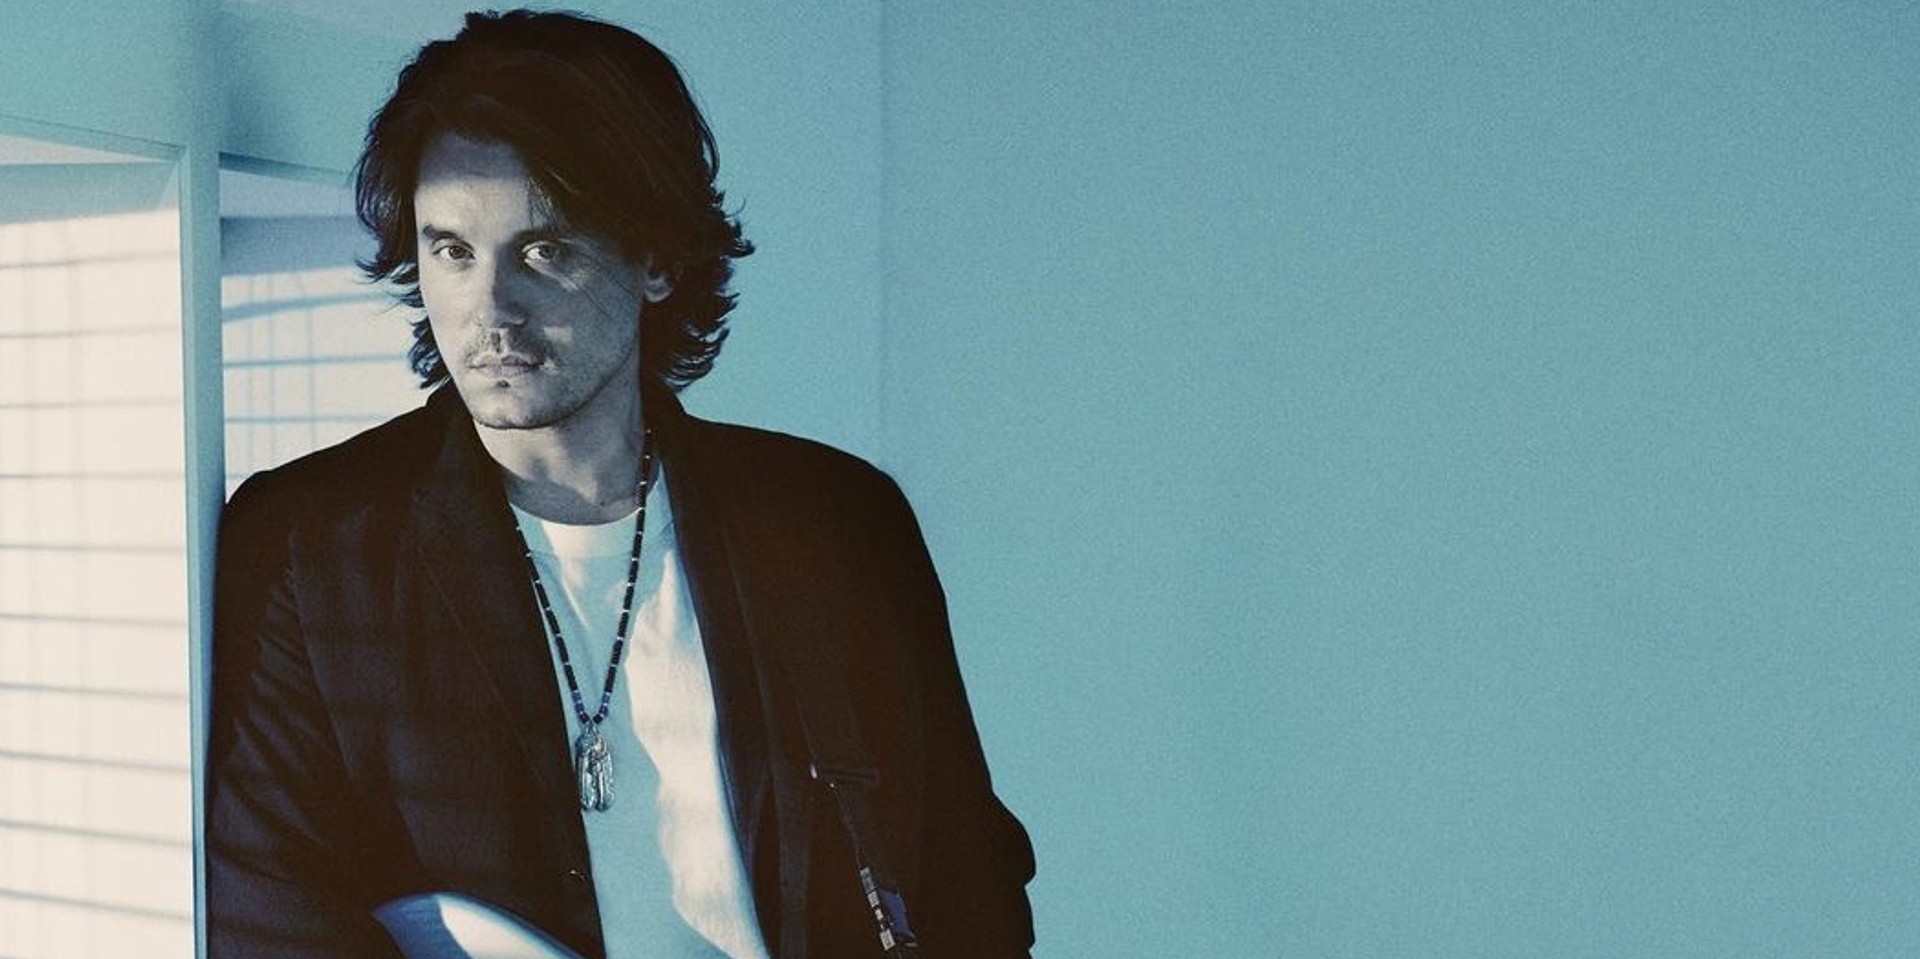 John Mayer previews forthcoming album 'Sob Rock' with new single 'Last Train Home' — listen